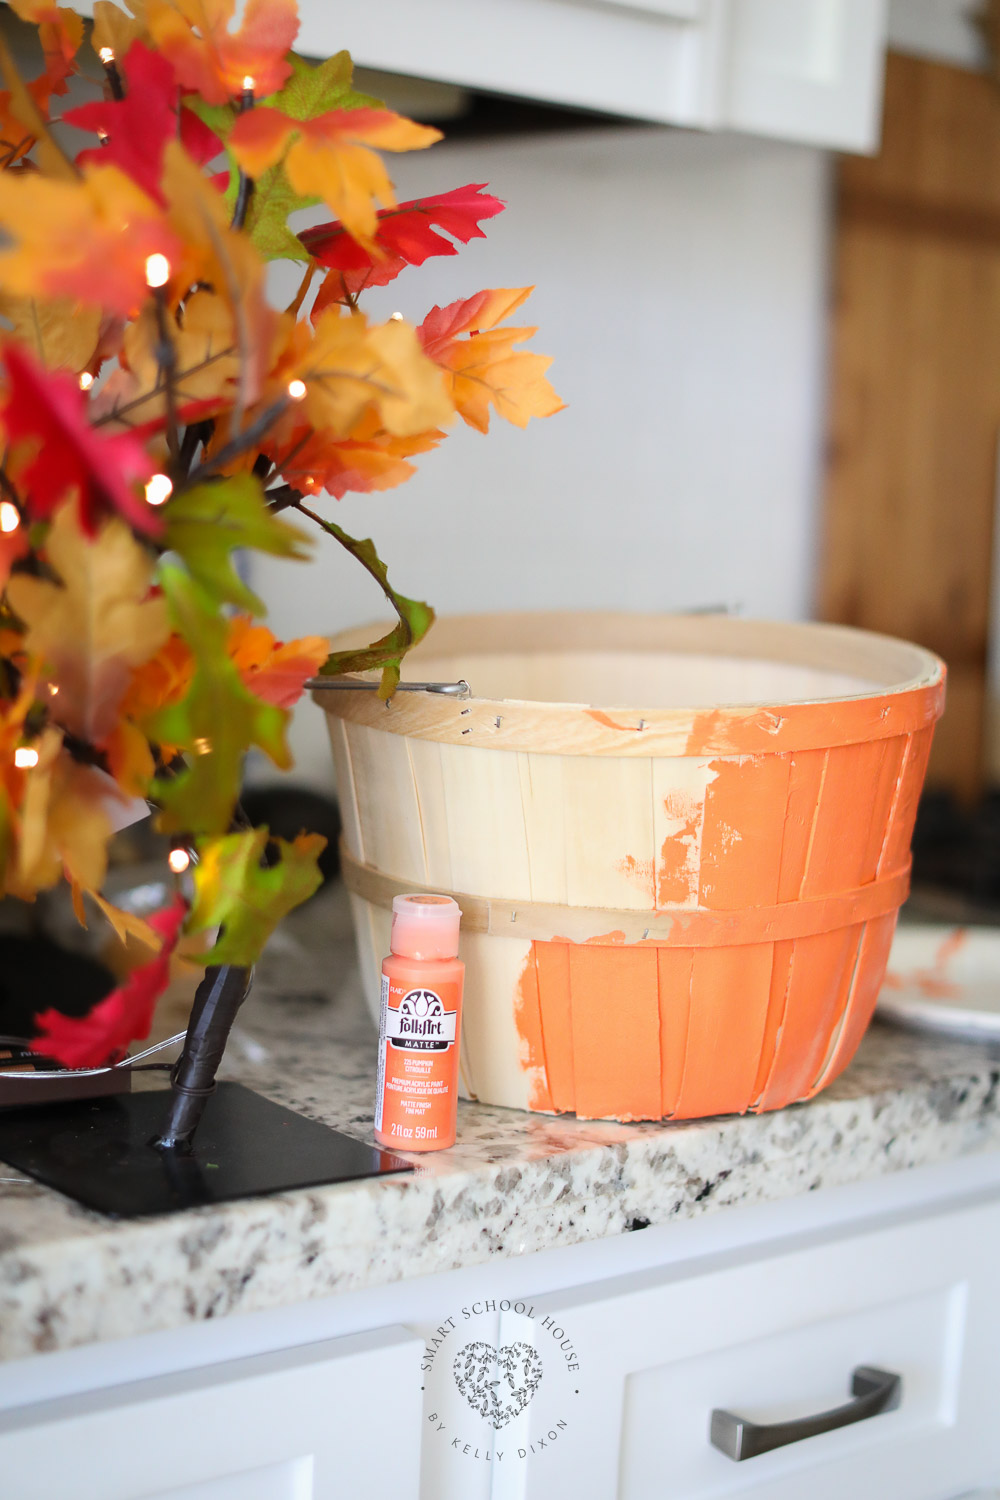 Painting the basket orange